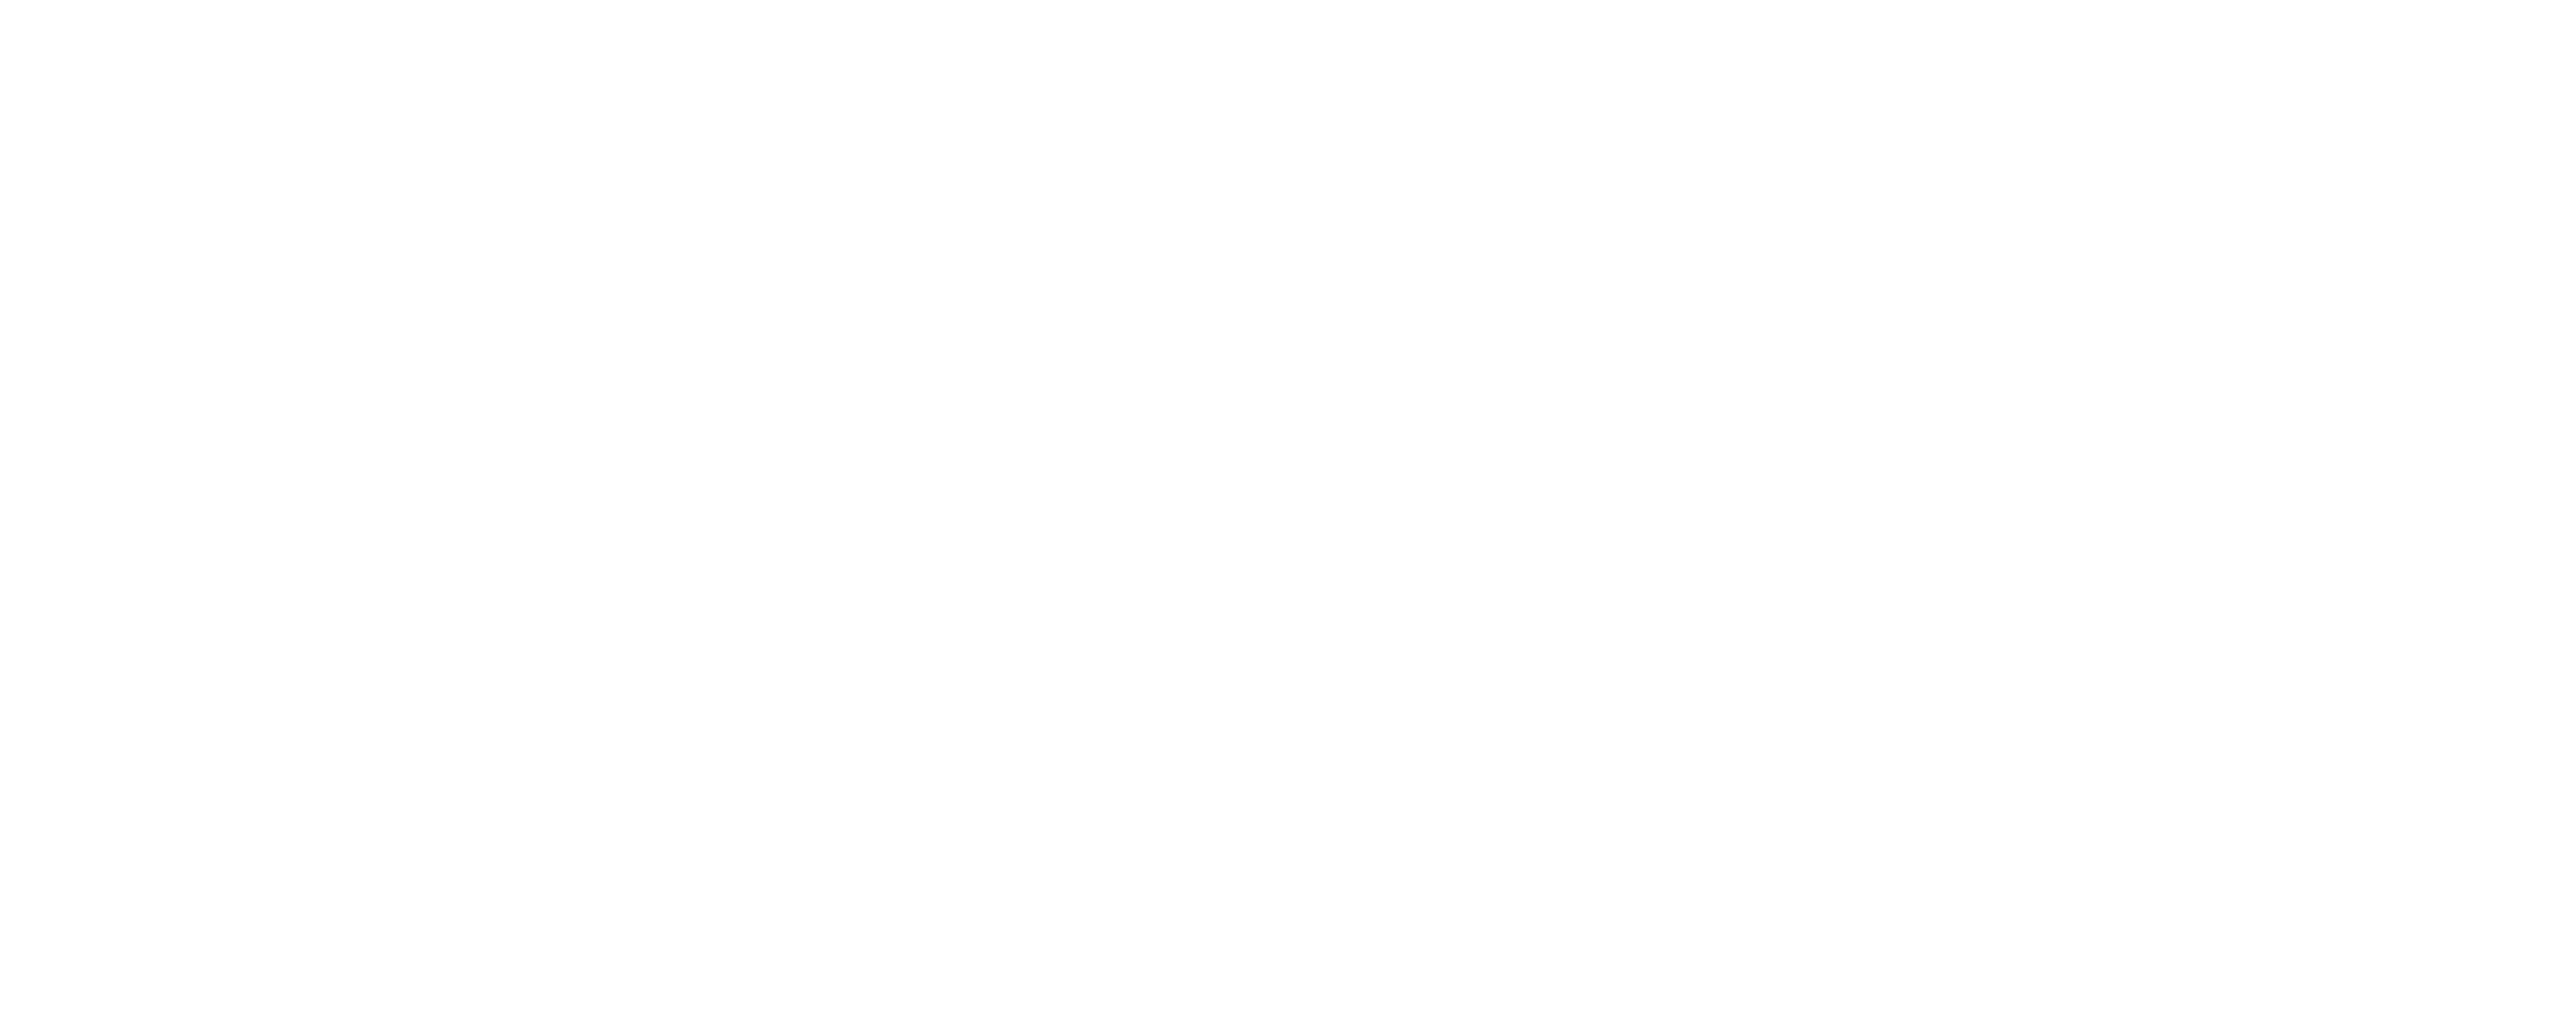 The Tripadvisor logo in white, on a transparent background.